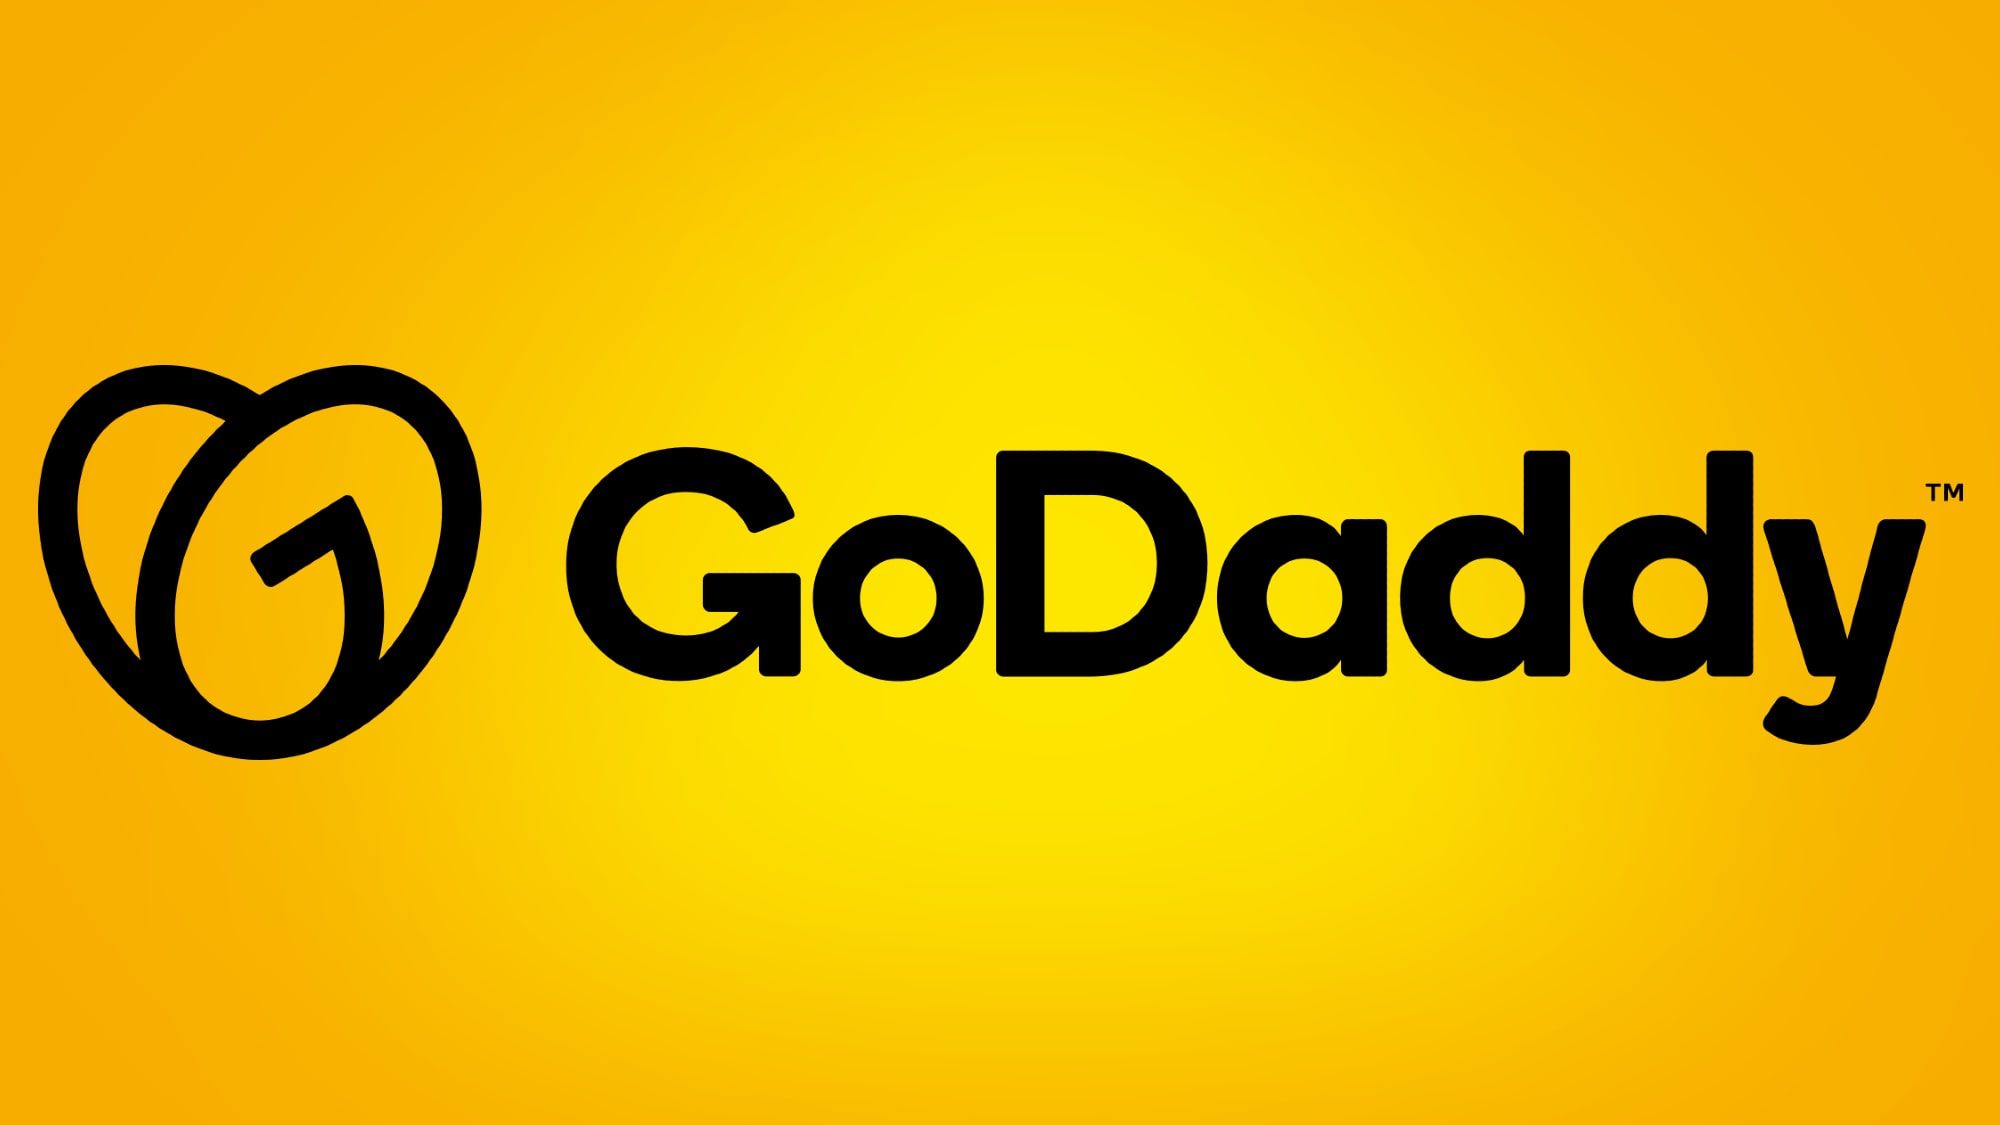 GoDaddy logo on yellow background with spotlight effect